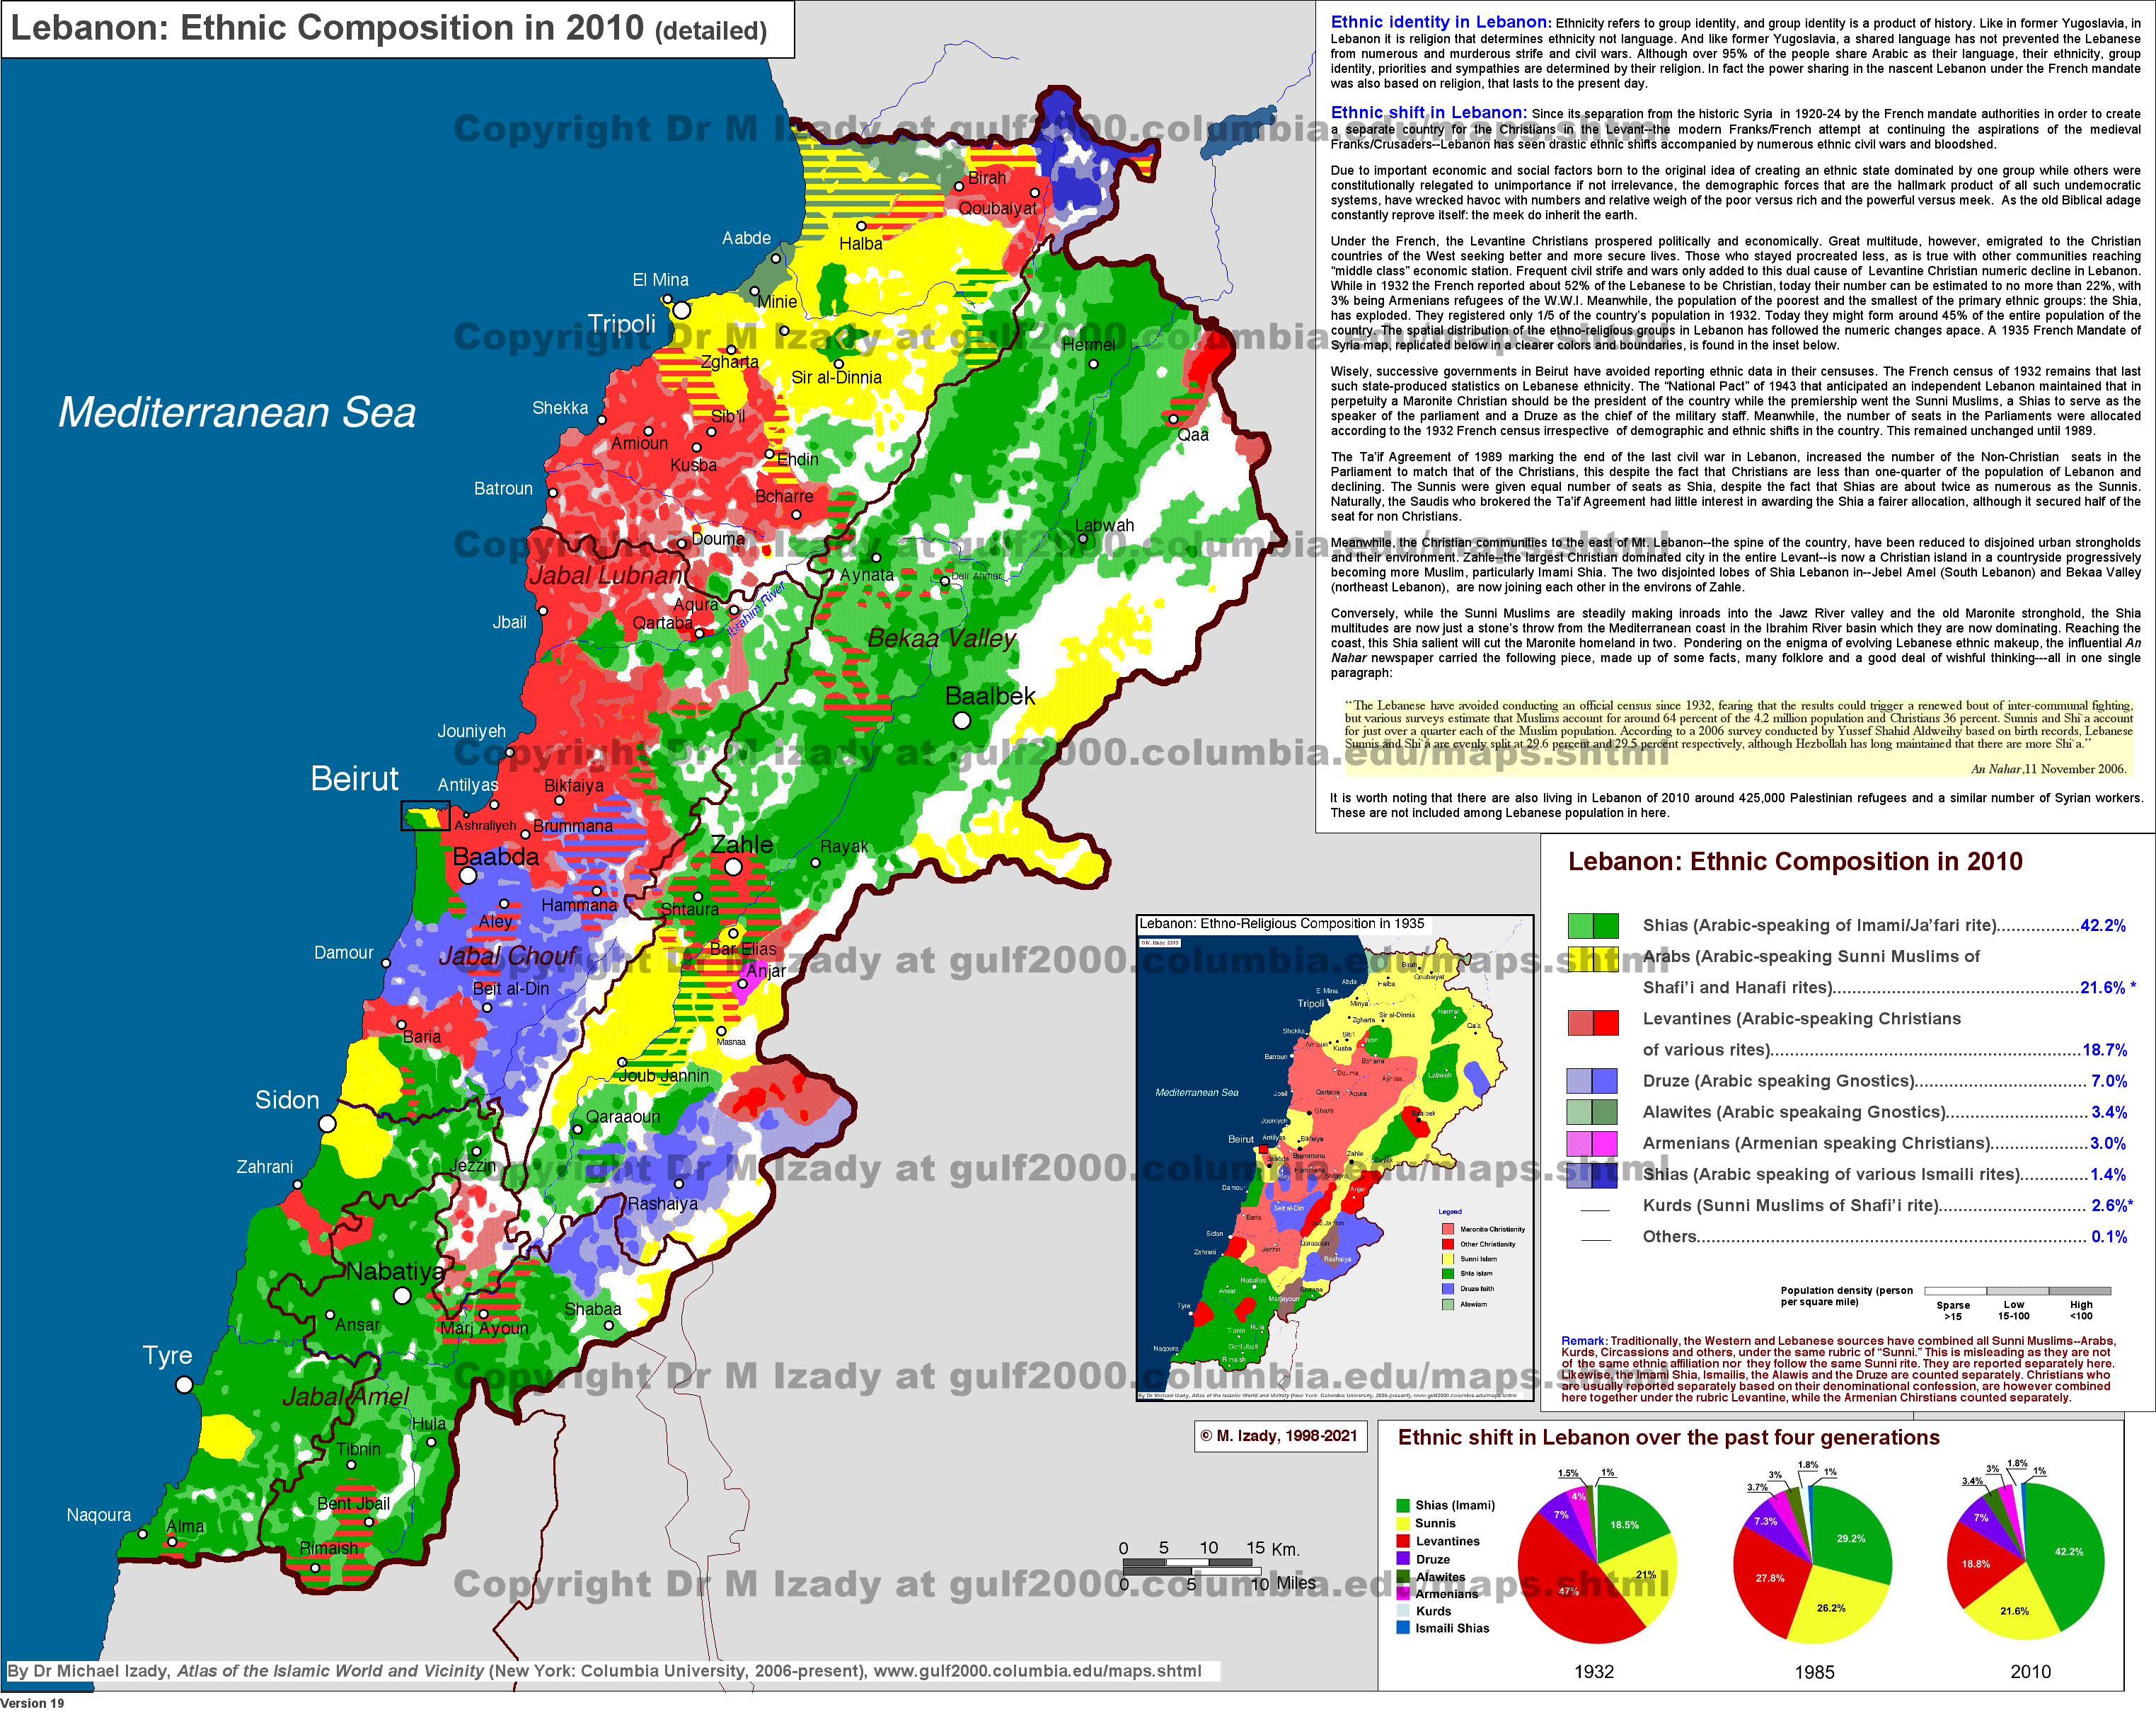 http://gulf2000.columbia.edu/images/maps/Lebanon_Ethnic_lg.png